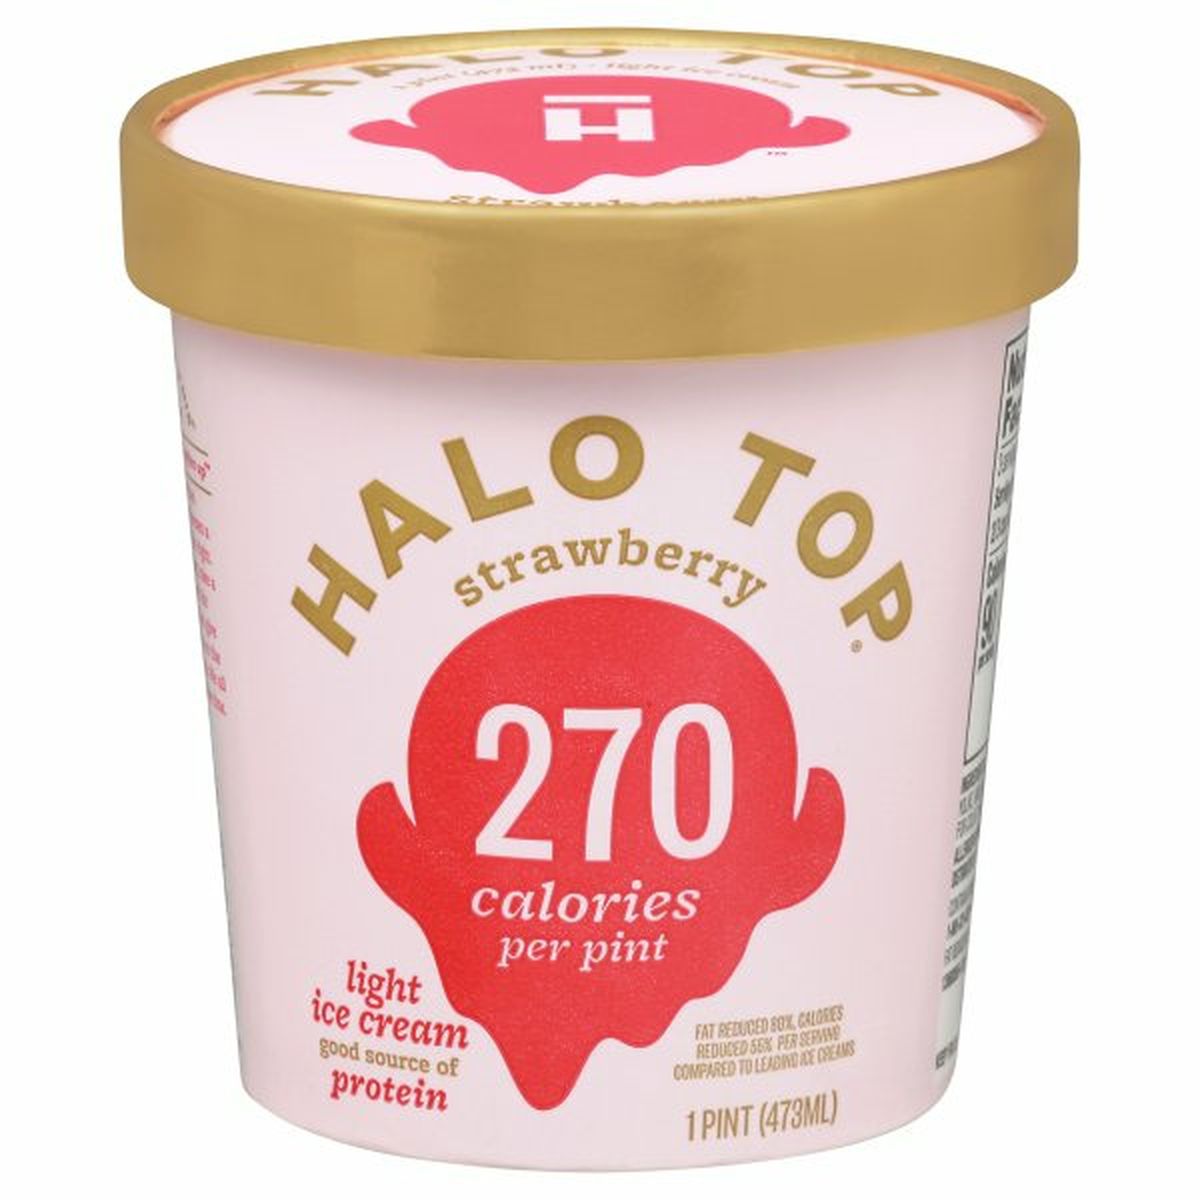 Calories in Halo Top Ice Cream, Light, Strawberry